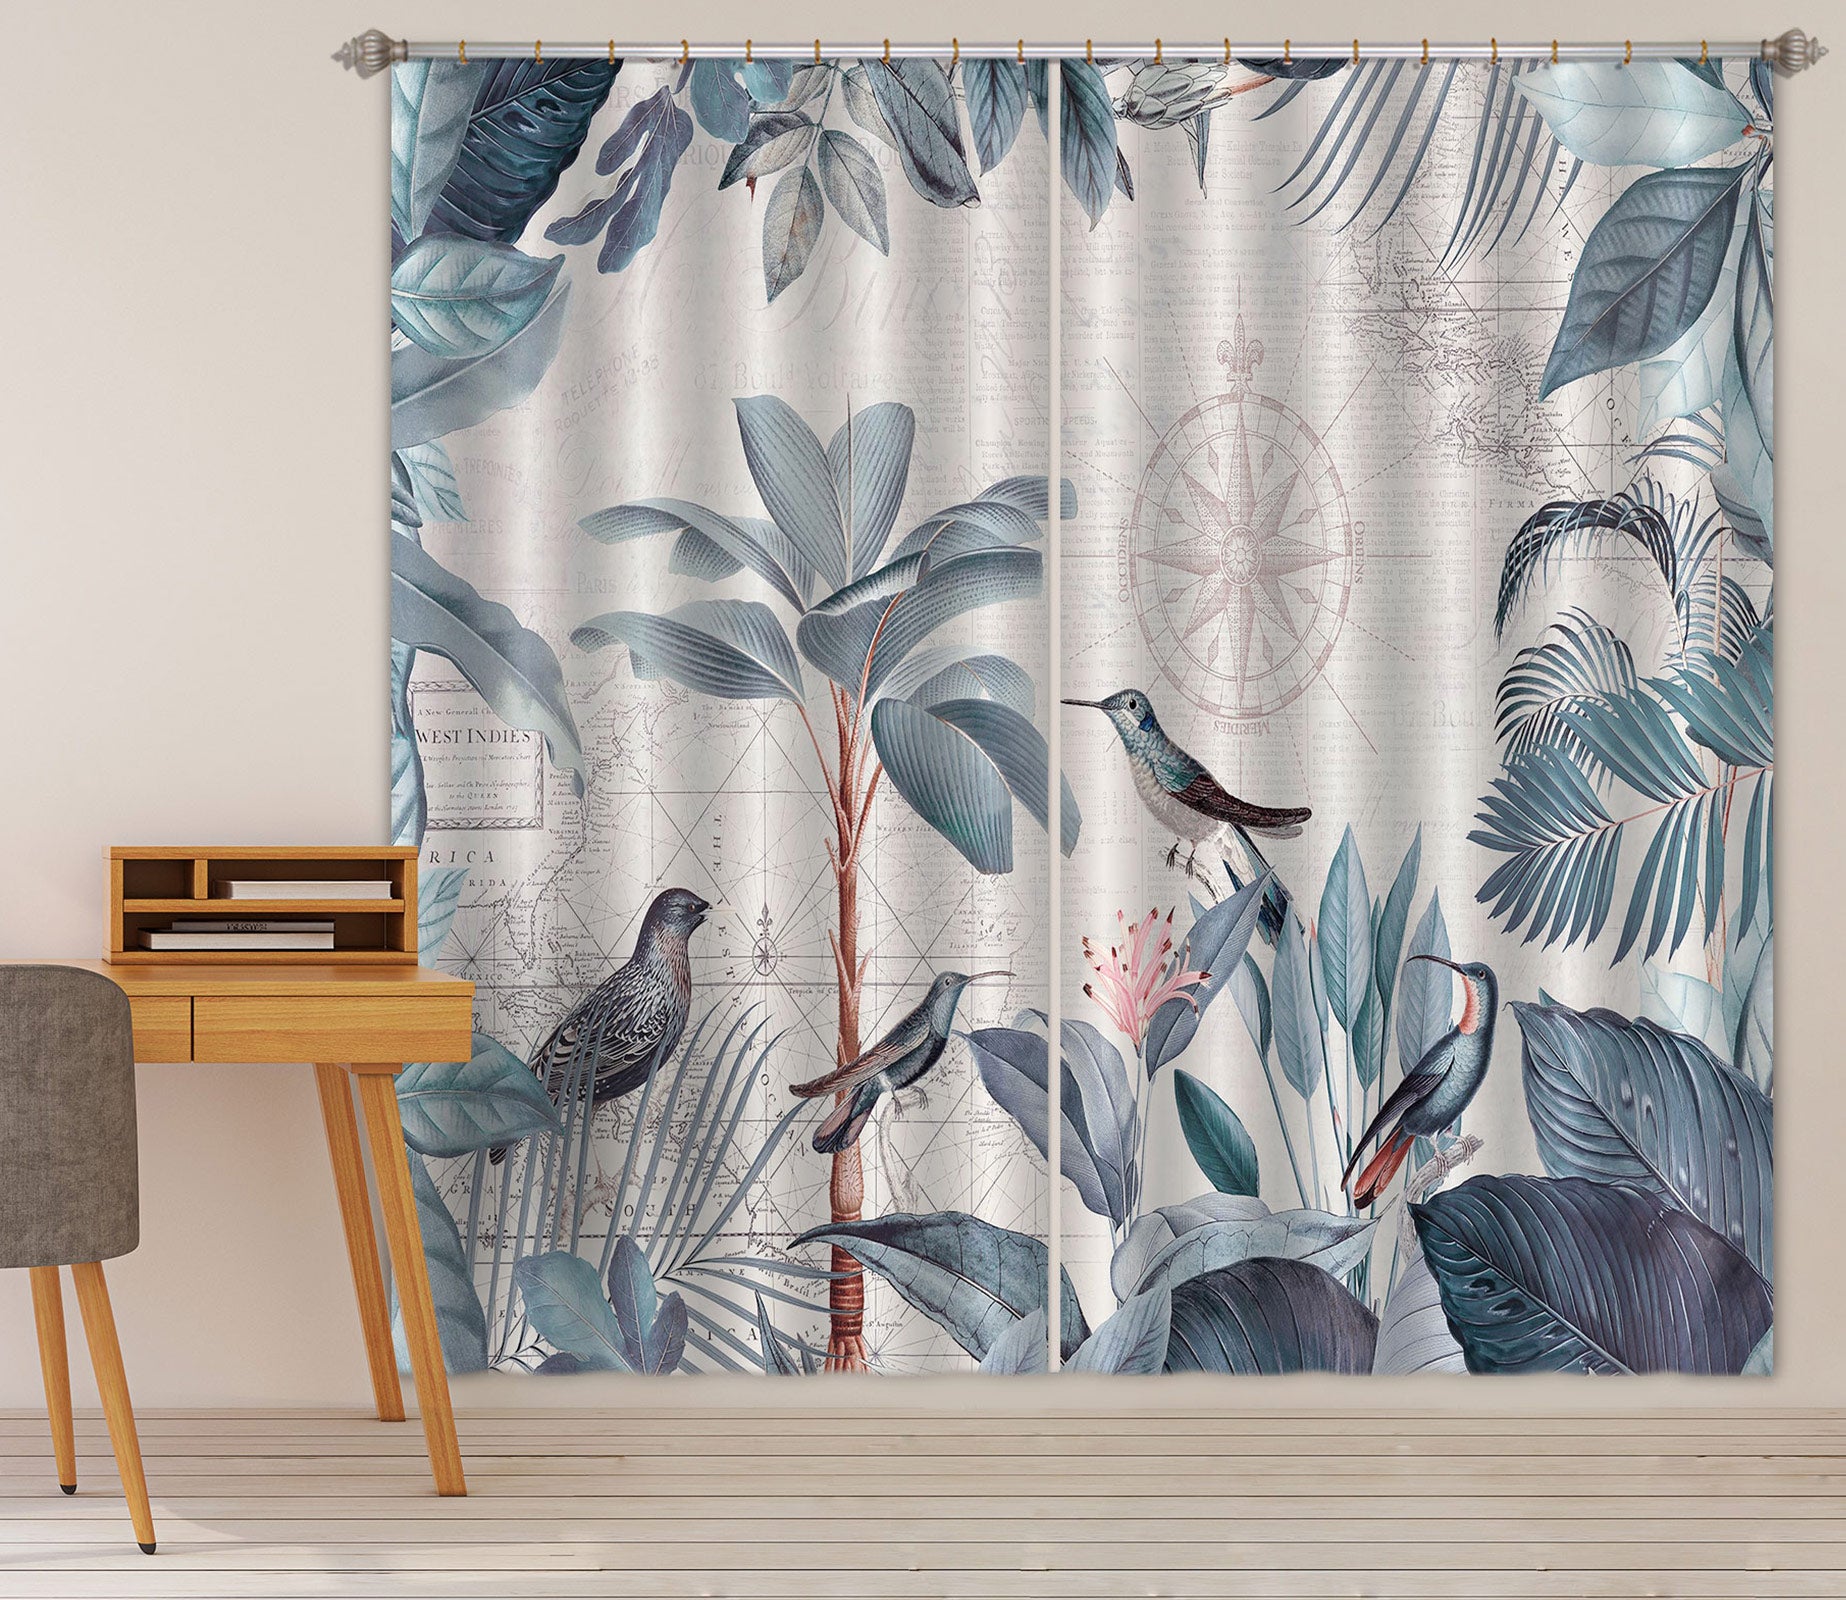 3D Bird Forest 022 Andrea haase Curtain Curtains Drapes